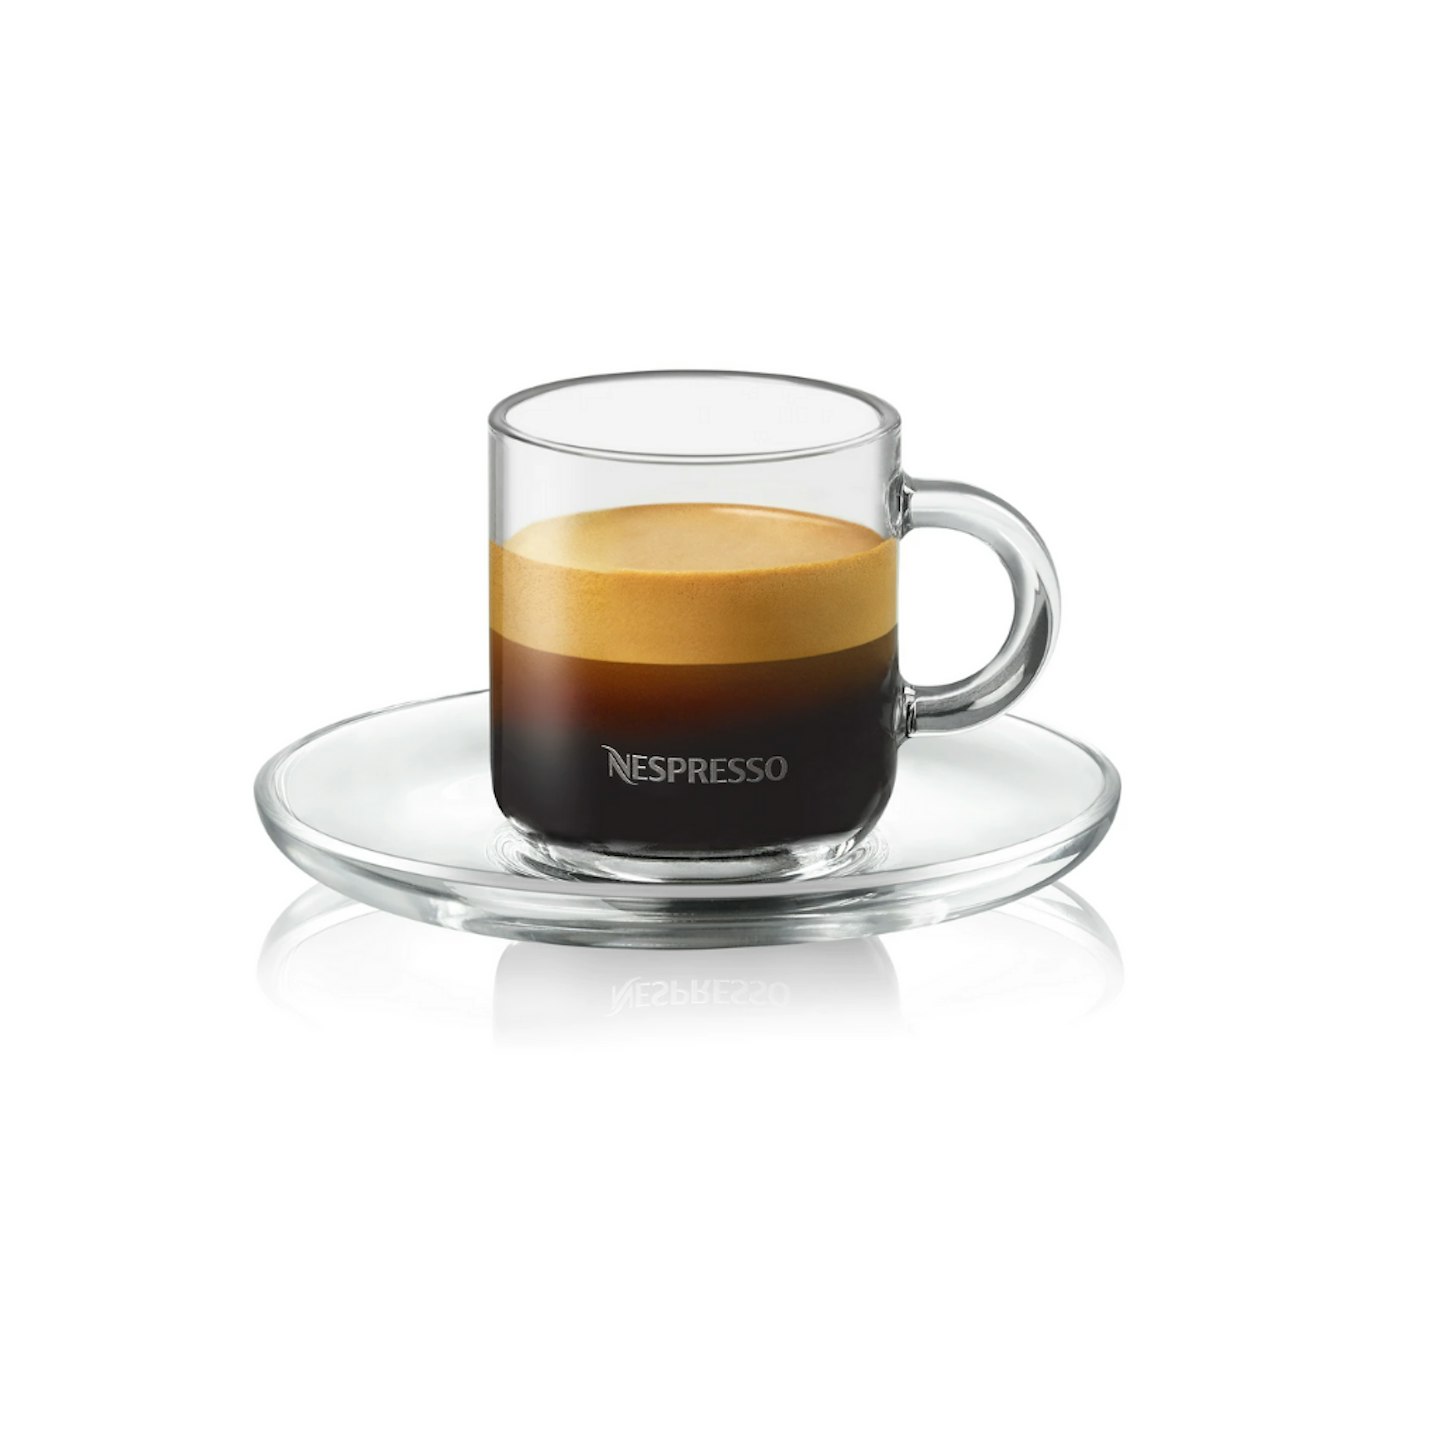 Vertuo Espresso Set